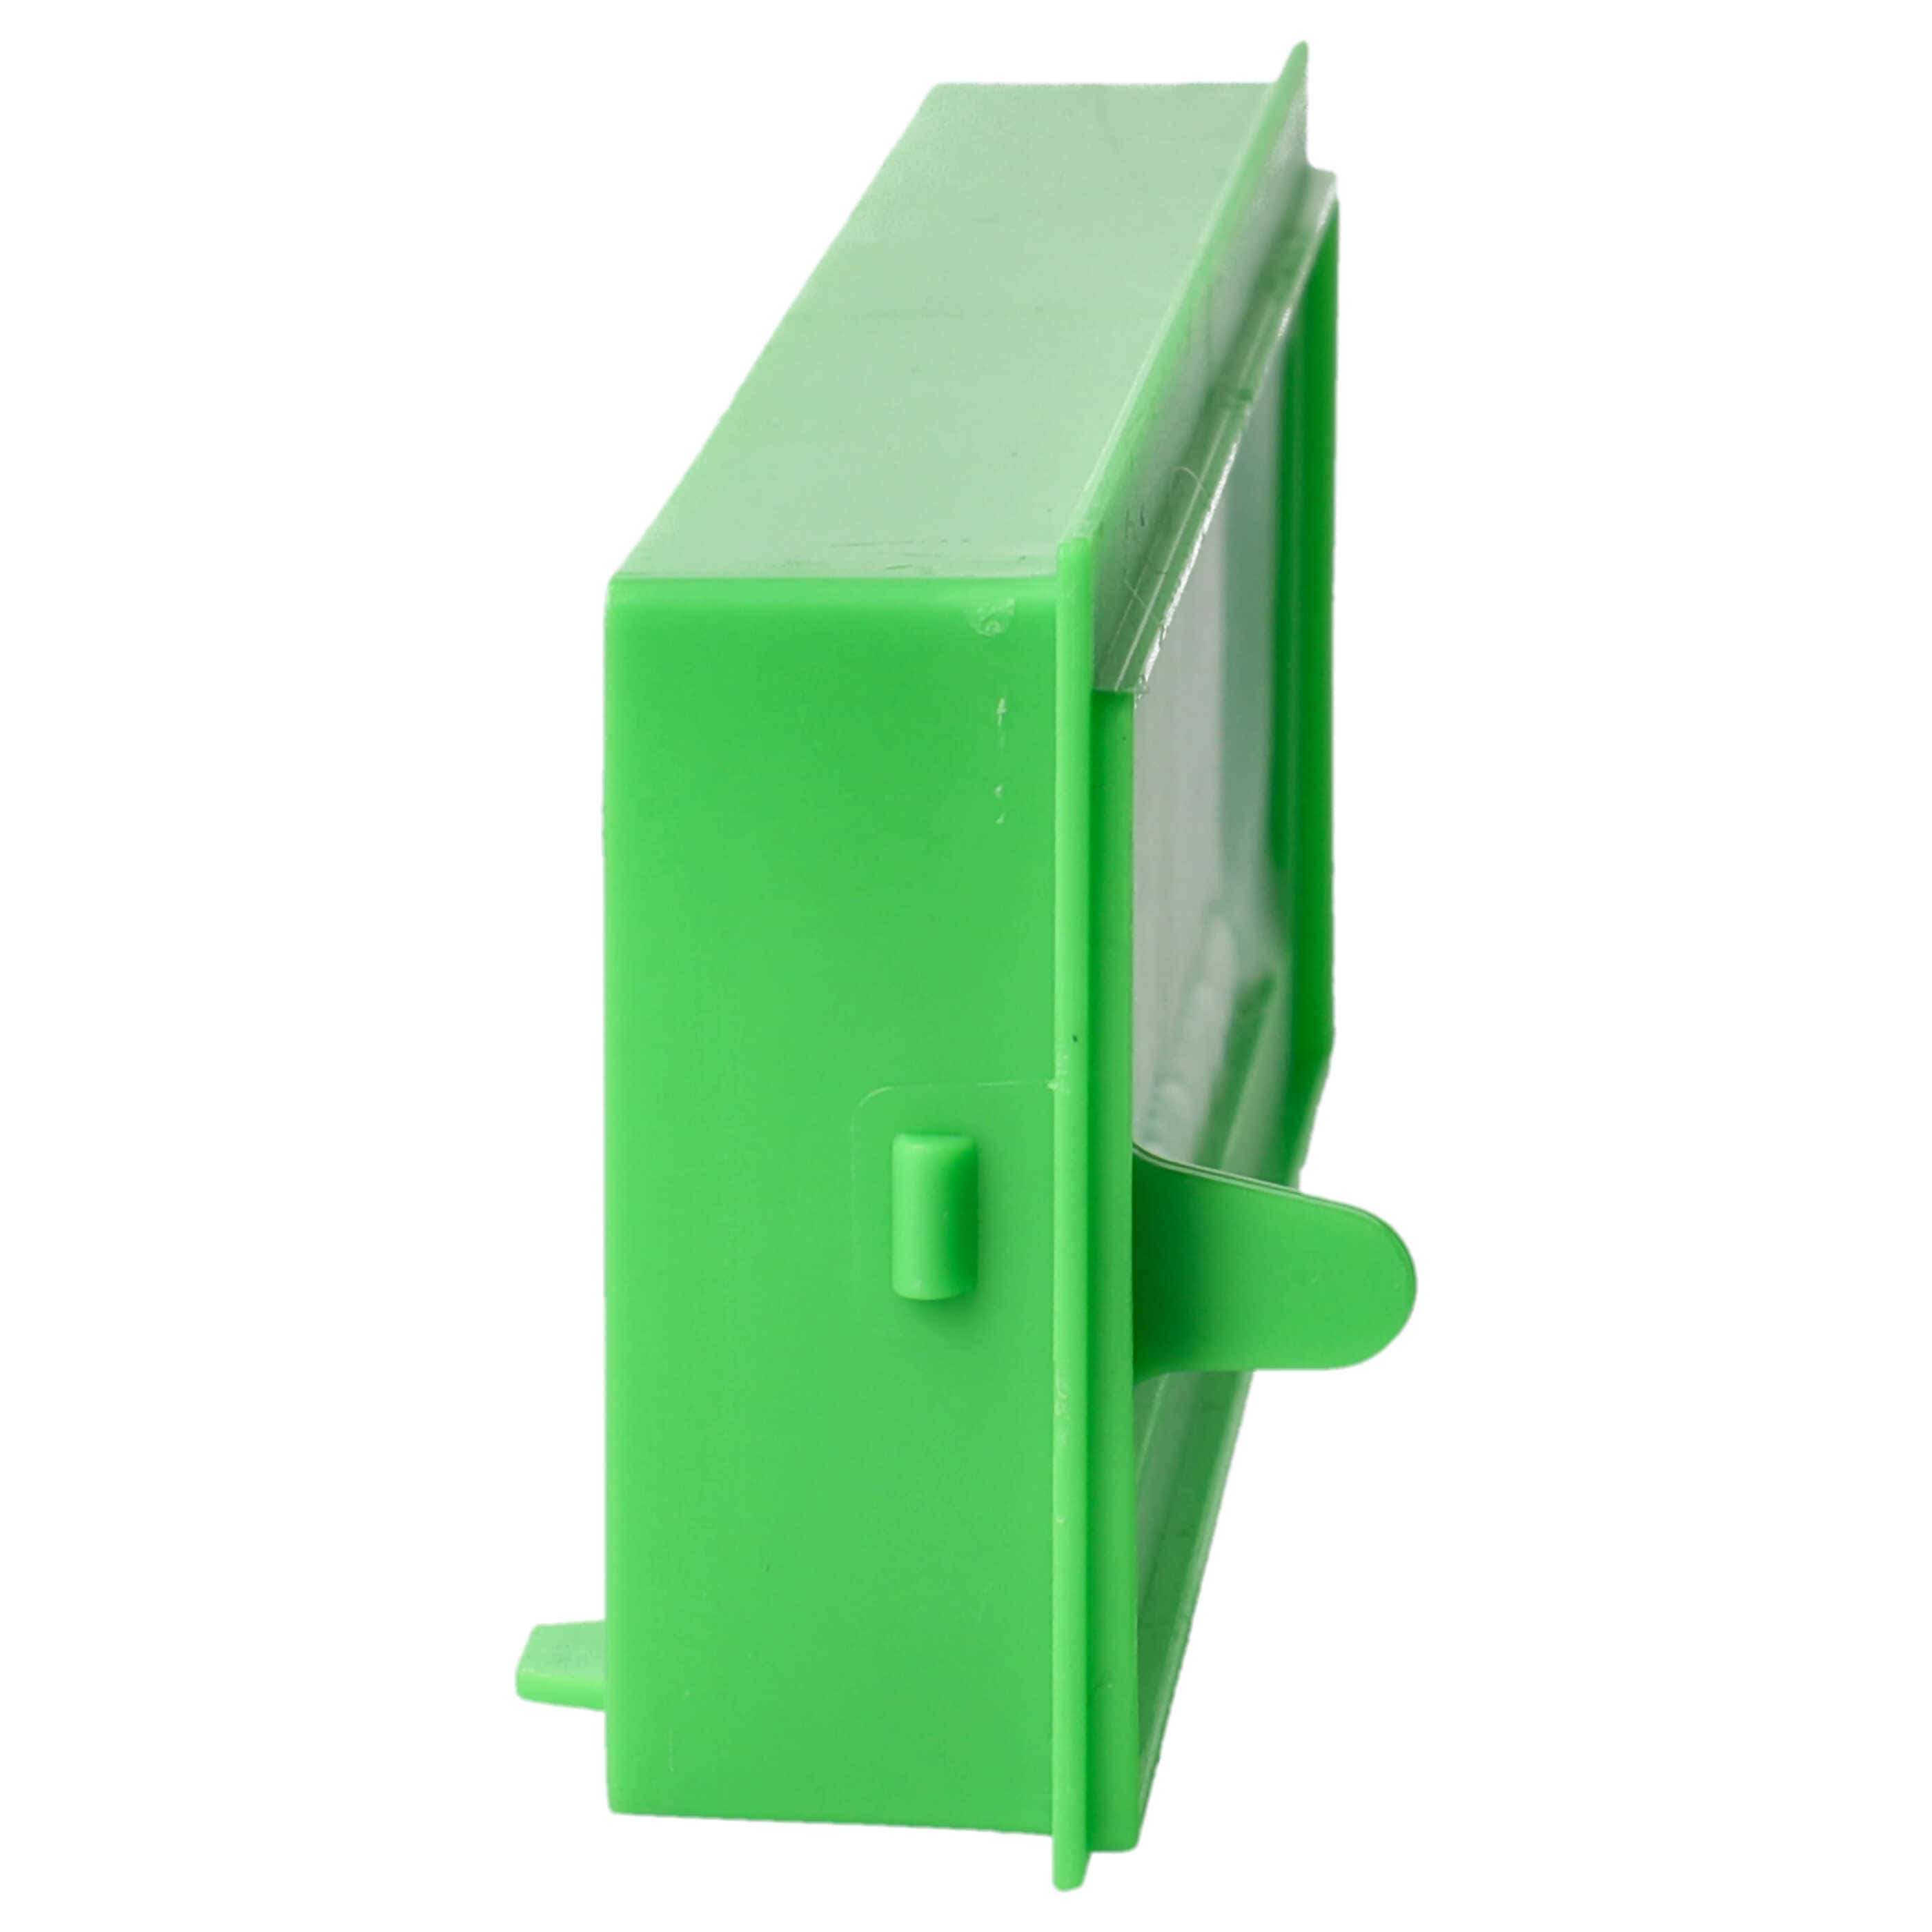 3x Filtro per aspirapolvere Vorwerk folletto - filtro HEPA, bianco / verde